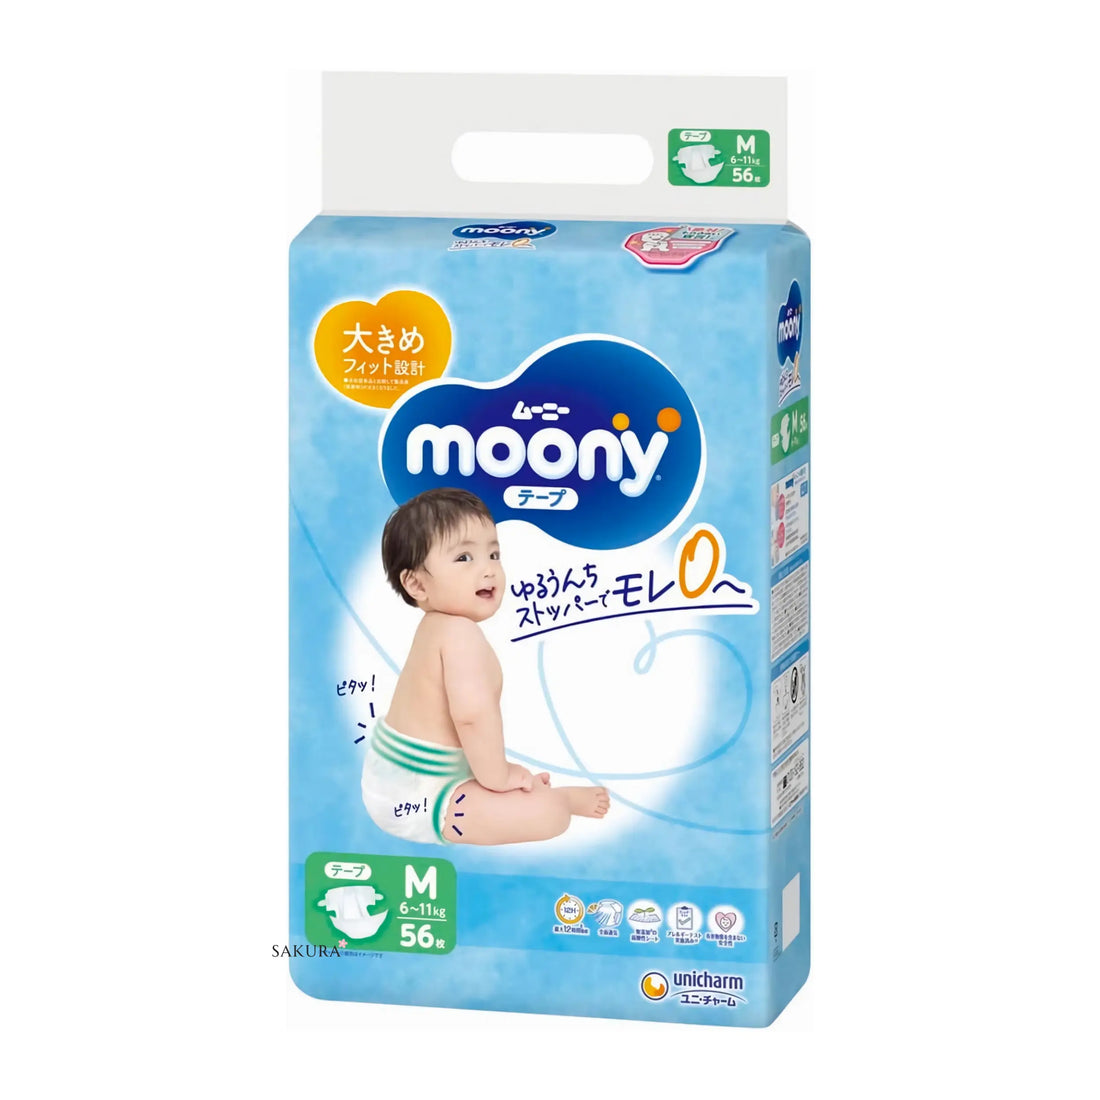 Moony Nappies JAPAN Tape M (6-11kg) 56pcs